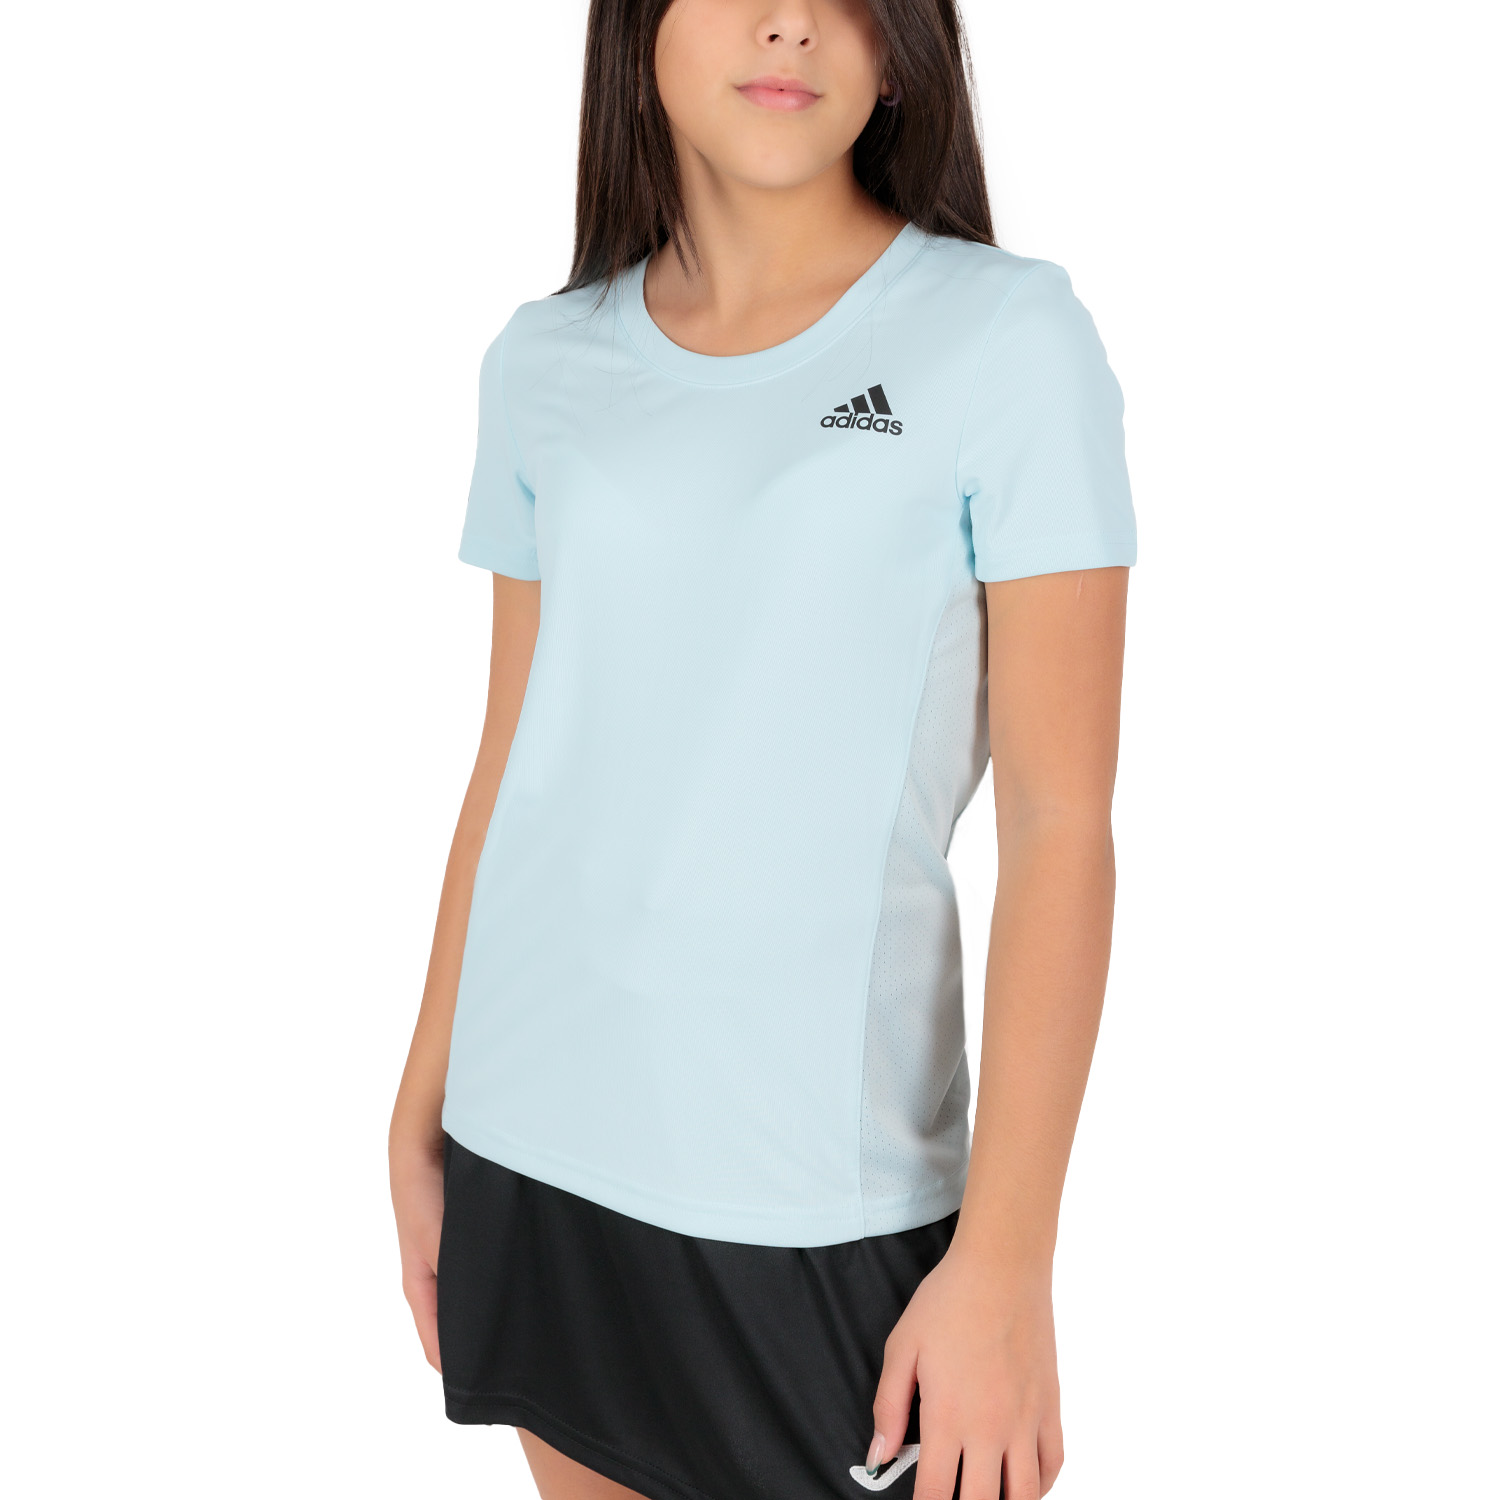 adidas Club T-Shirt Girl's - Almost Blue